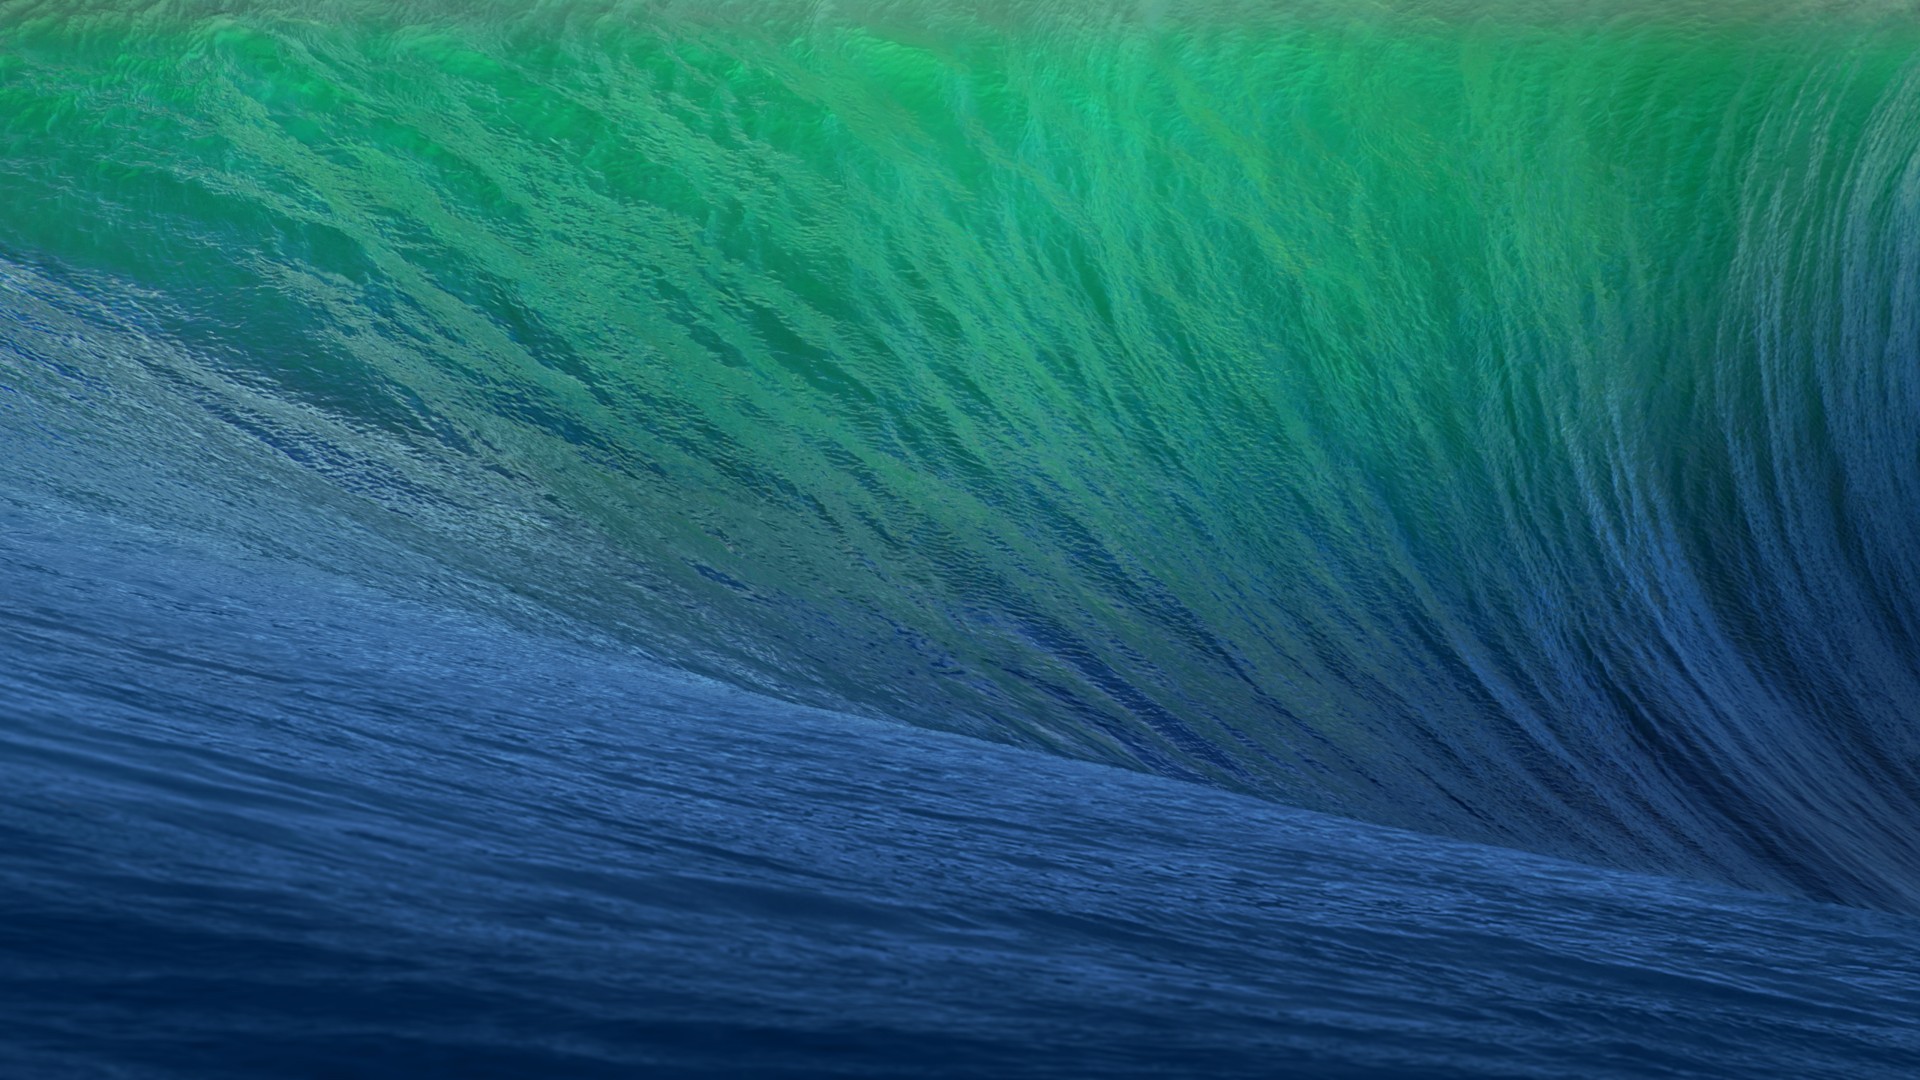 OSX, 5k, 4k wallpaper, 8k, Wave, Blue, Big (horizontal)